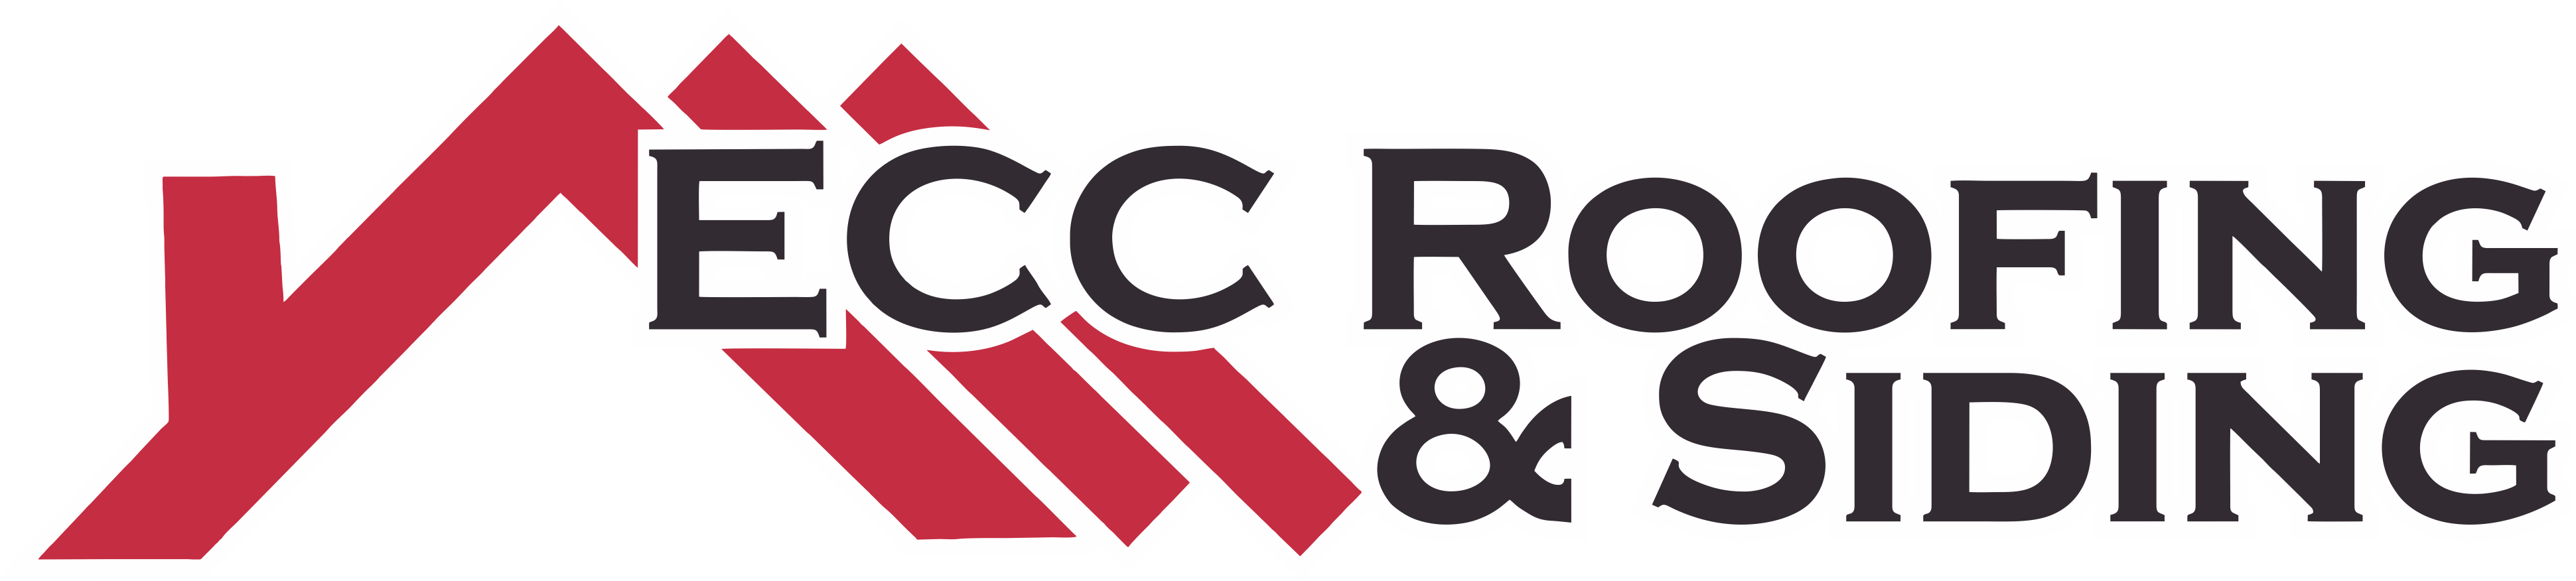 ECC Roofing and Siding logo